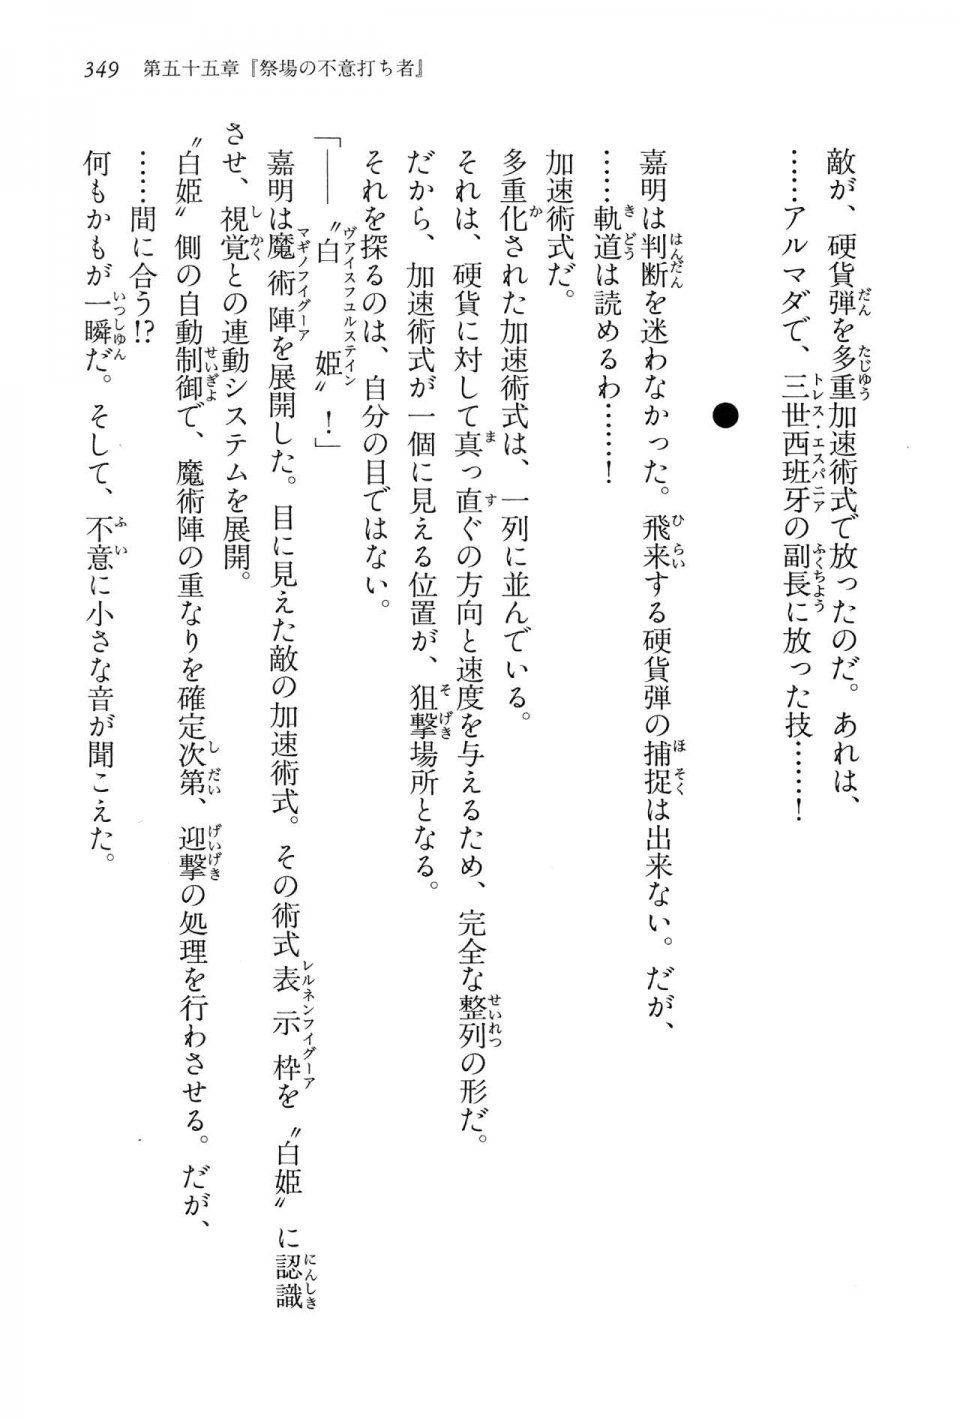 Kyoukai Senjou no Horizon LN Vol 15(6C) Part 1 - Photo #349